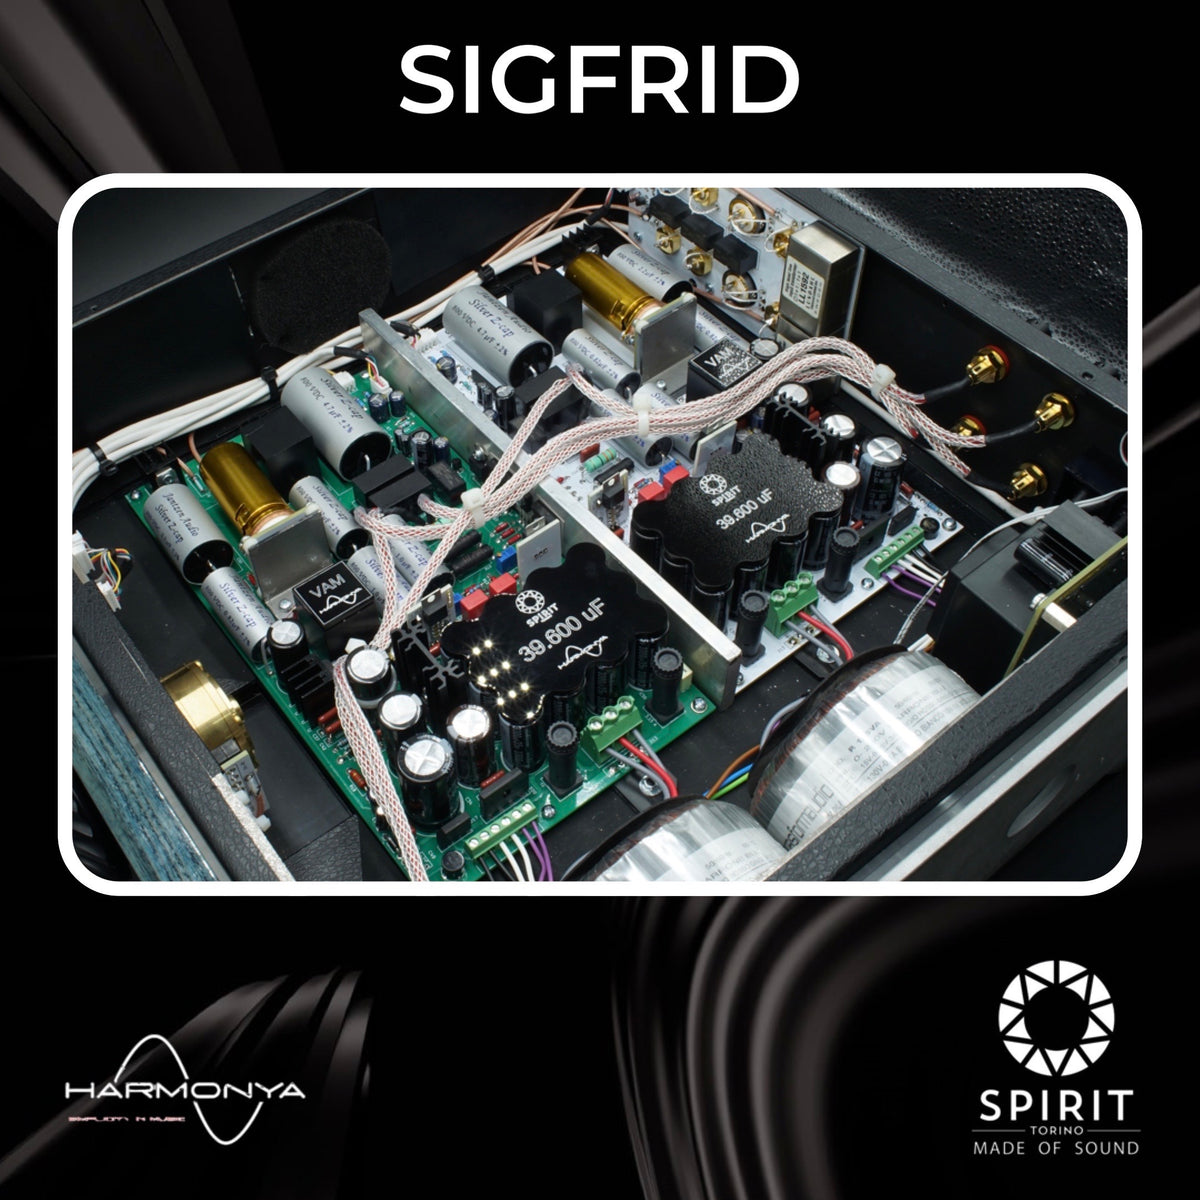 Sigfrid headphone - speaker hybrid amp